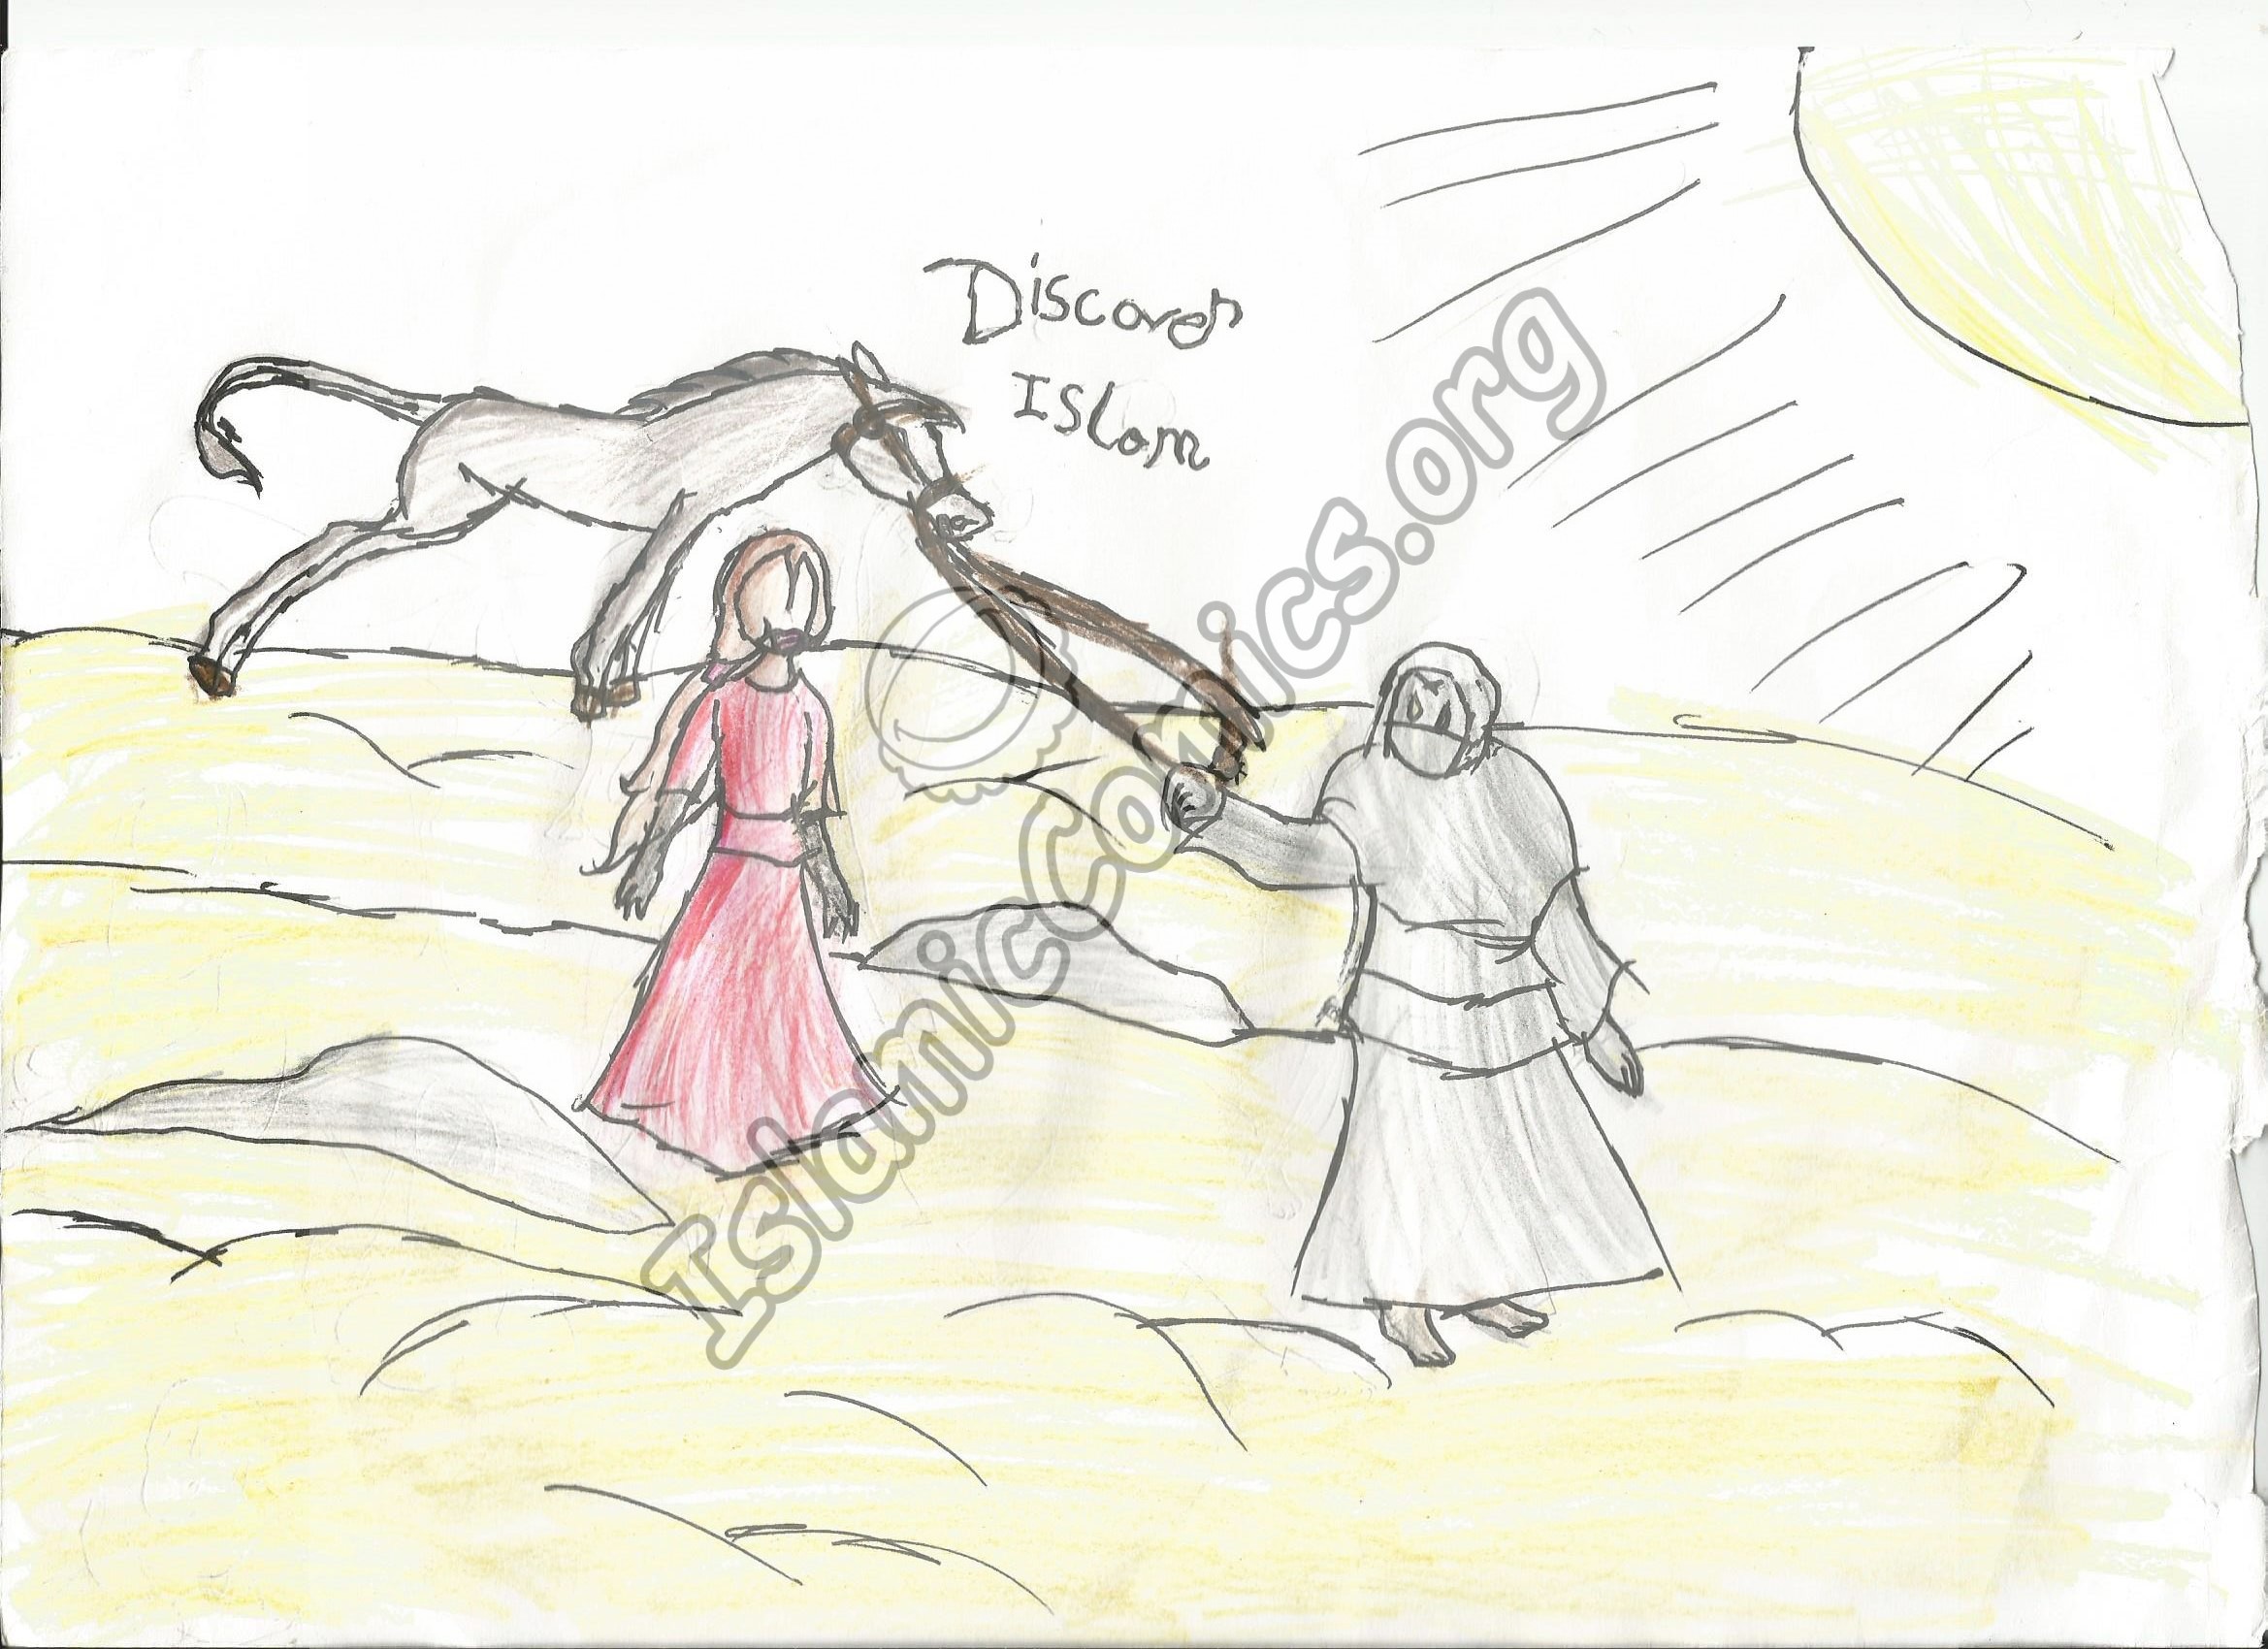 Horse in the desert - Islamic illustrations by Muslim Kids